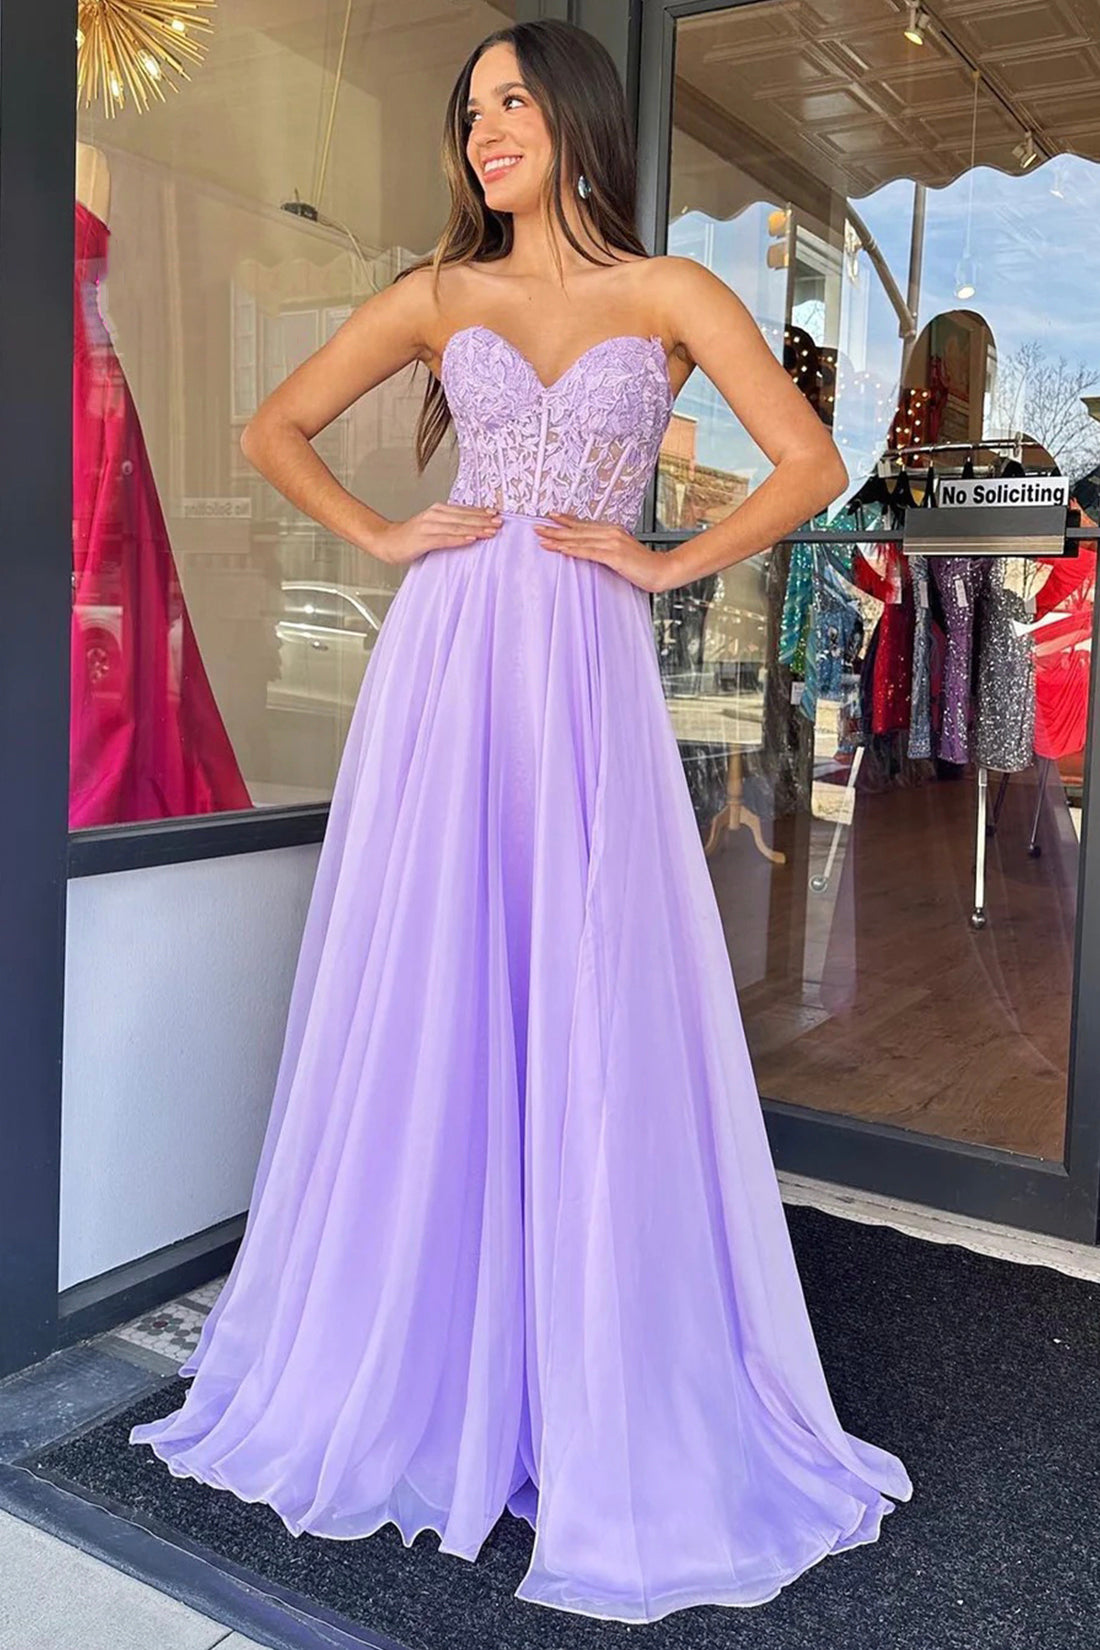 Orchid pink and lavender dress | Dress, Lavender dresses, Long dress